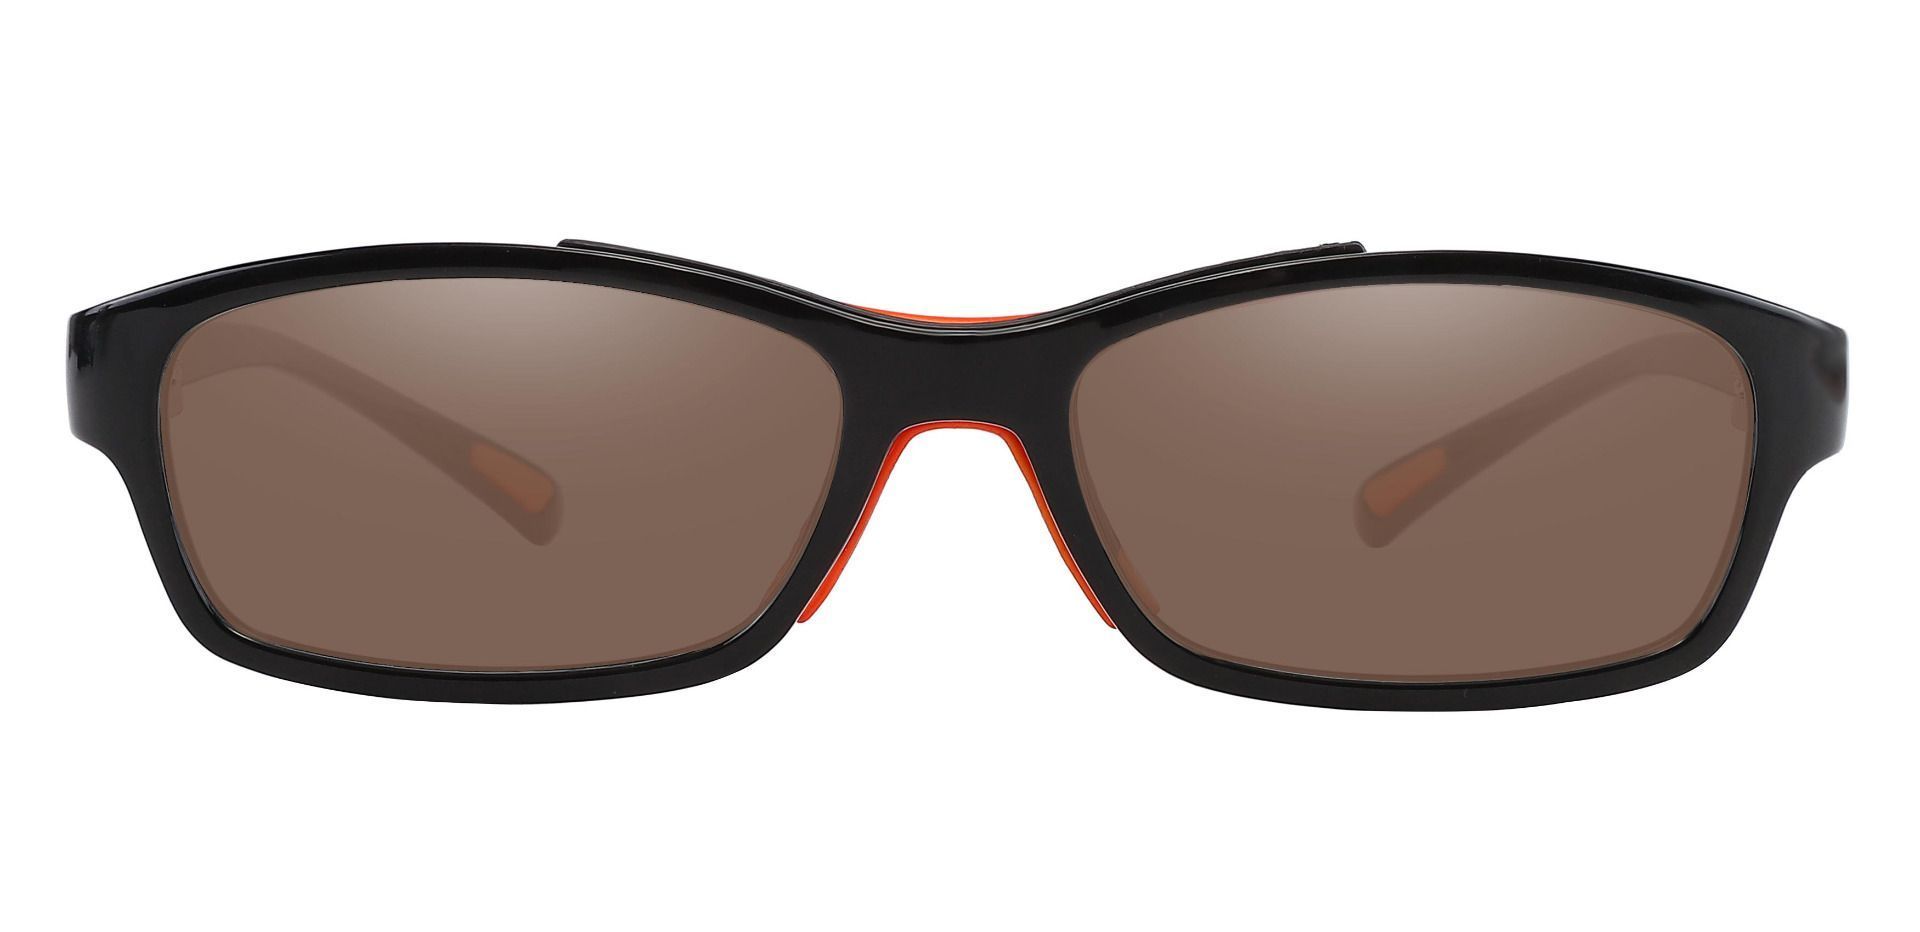 Glynn Rectangle Lined Bifocal Sunglasses - Black Frame With Brown Lenses